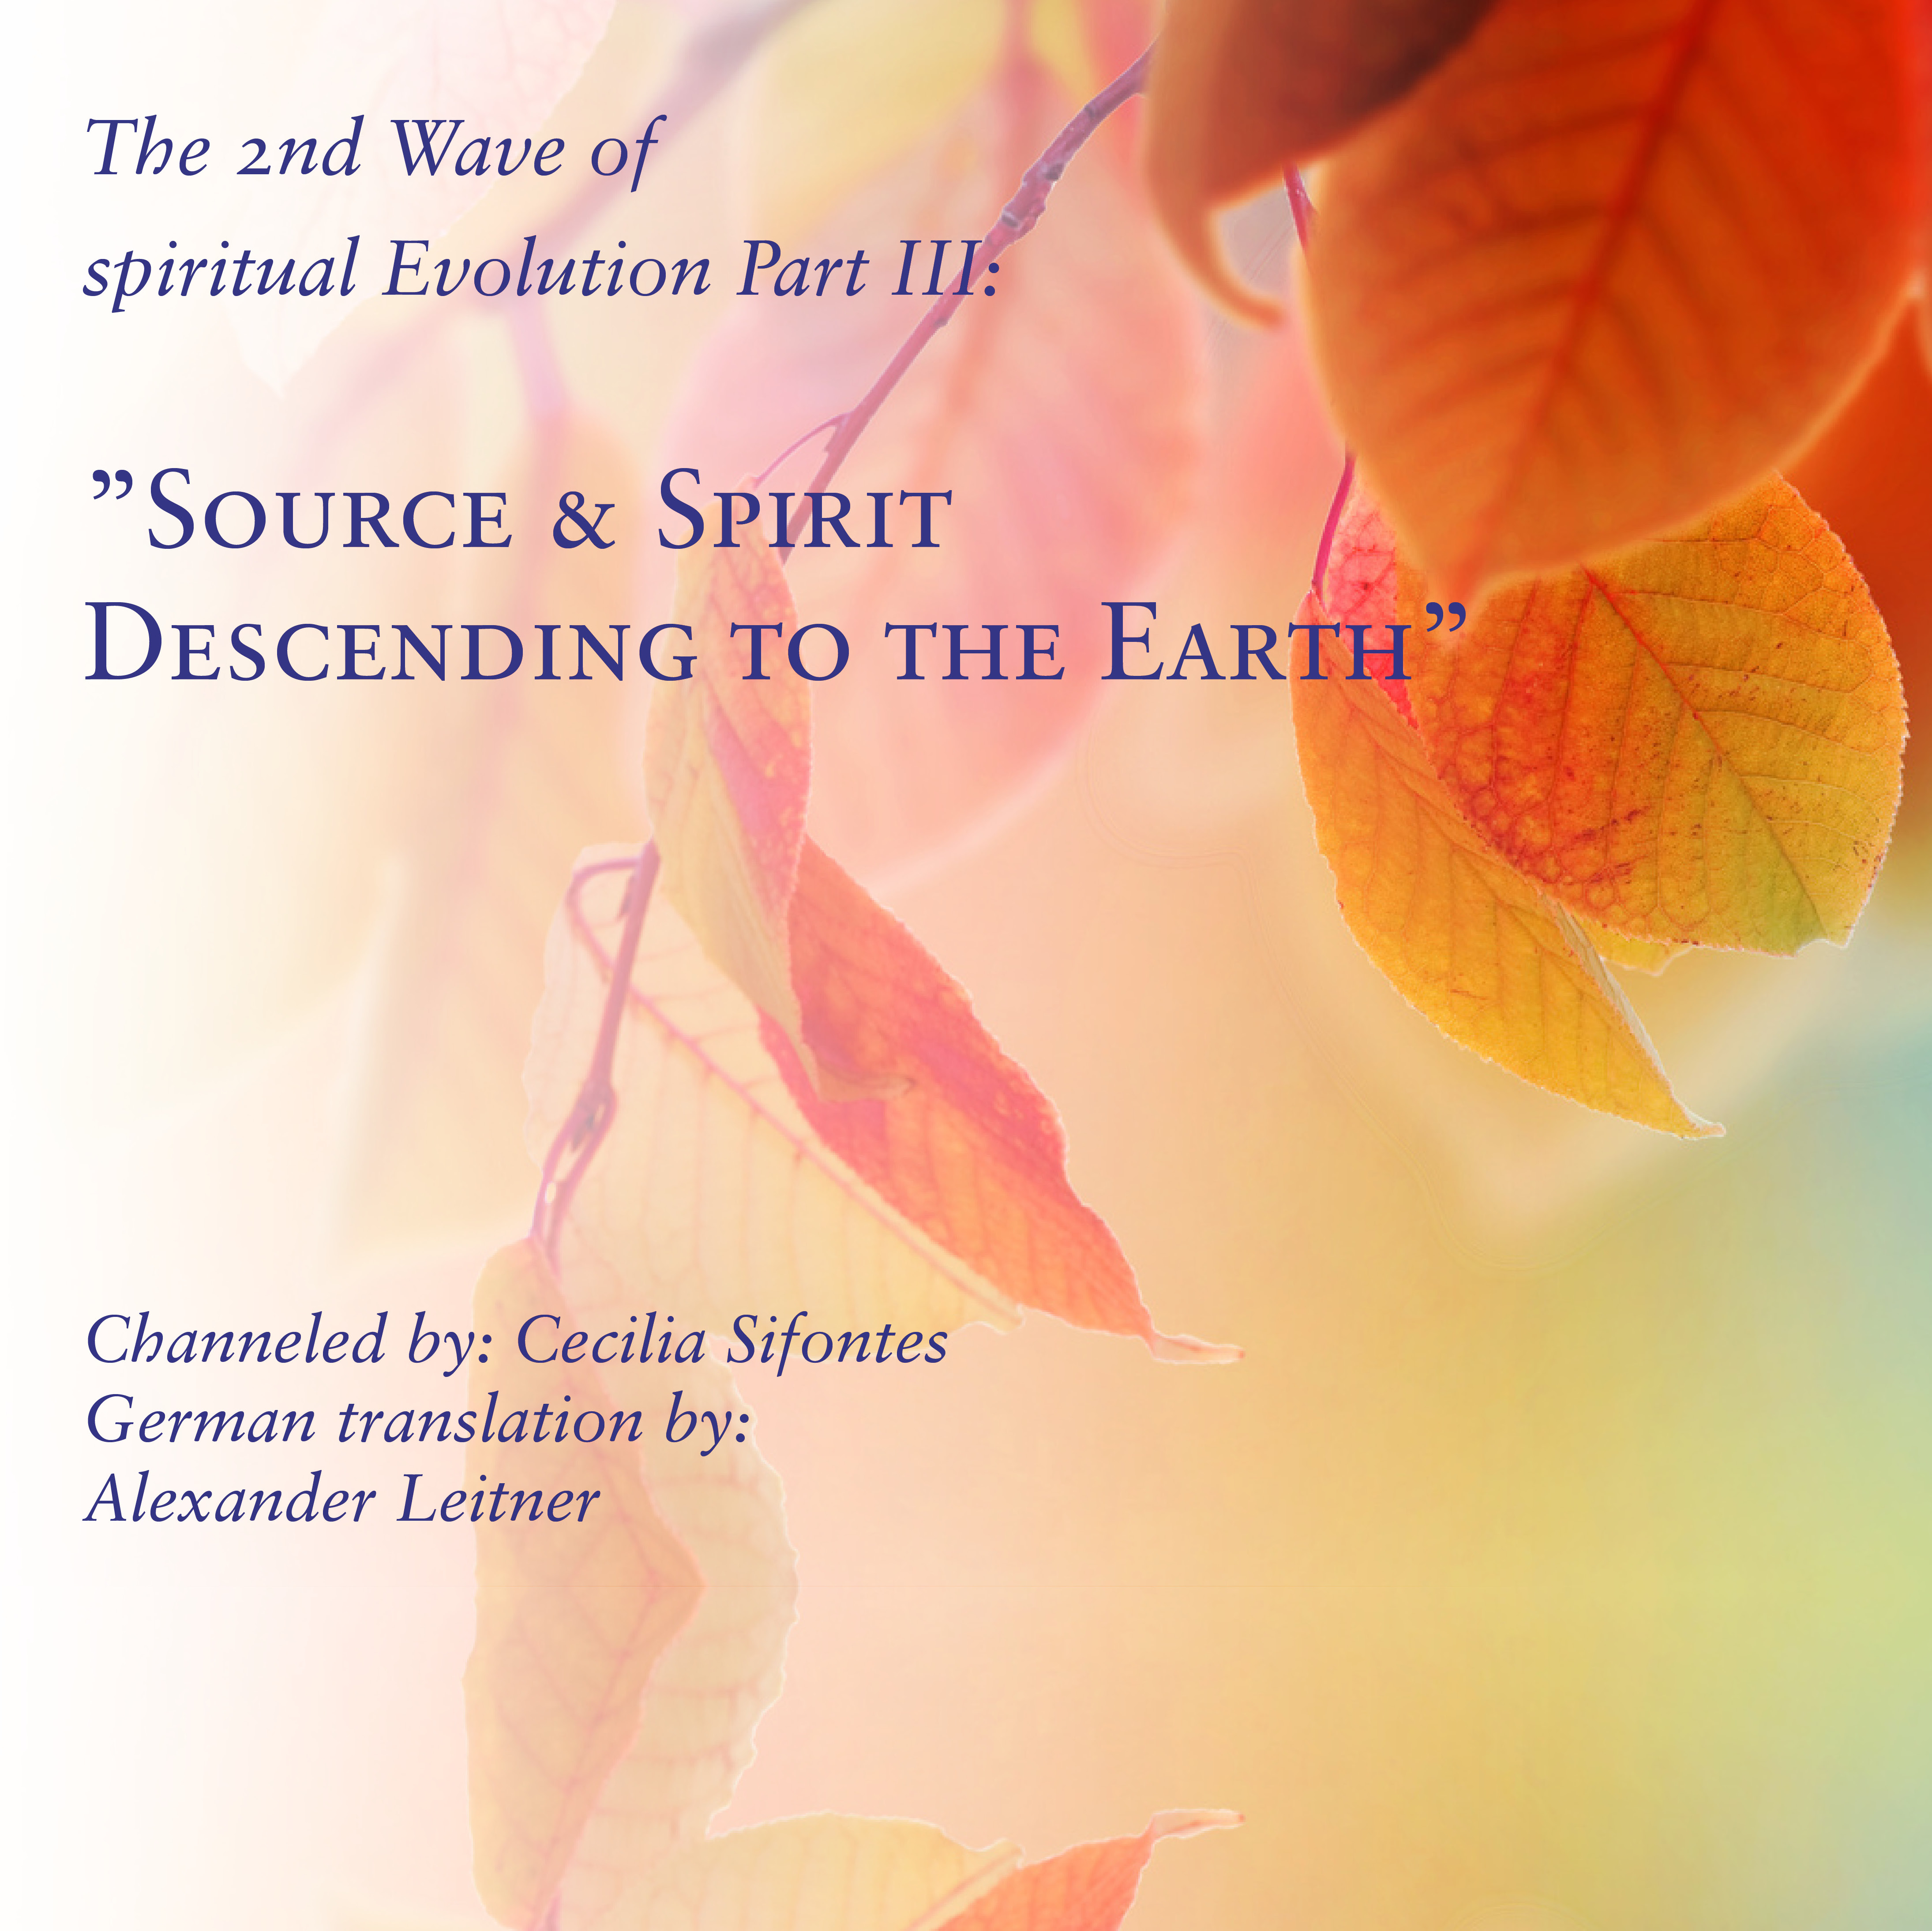 Source & Spirit Descending